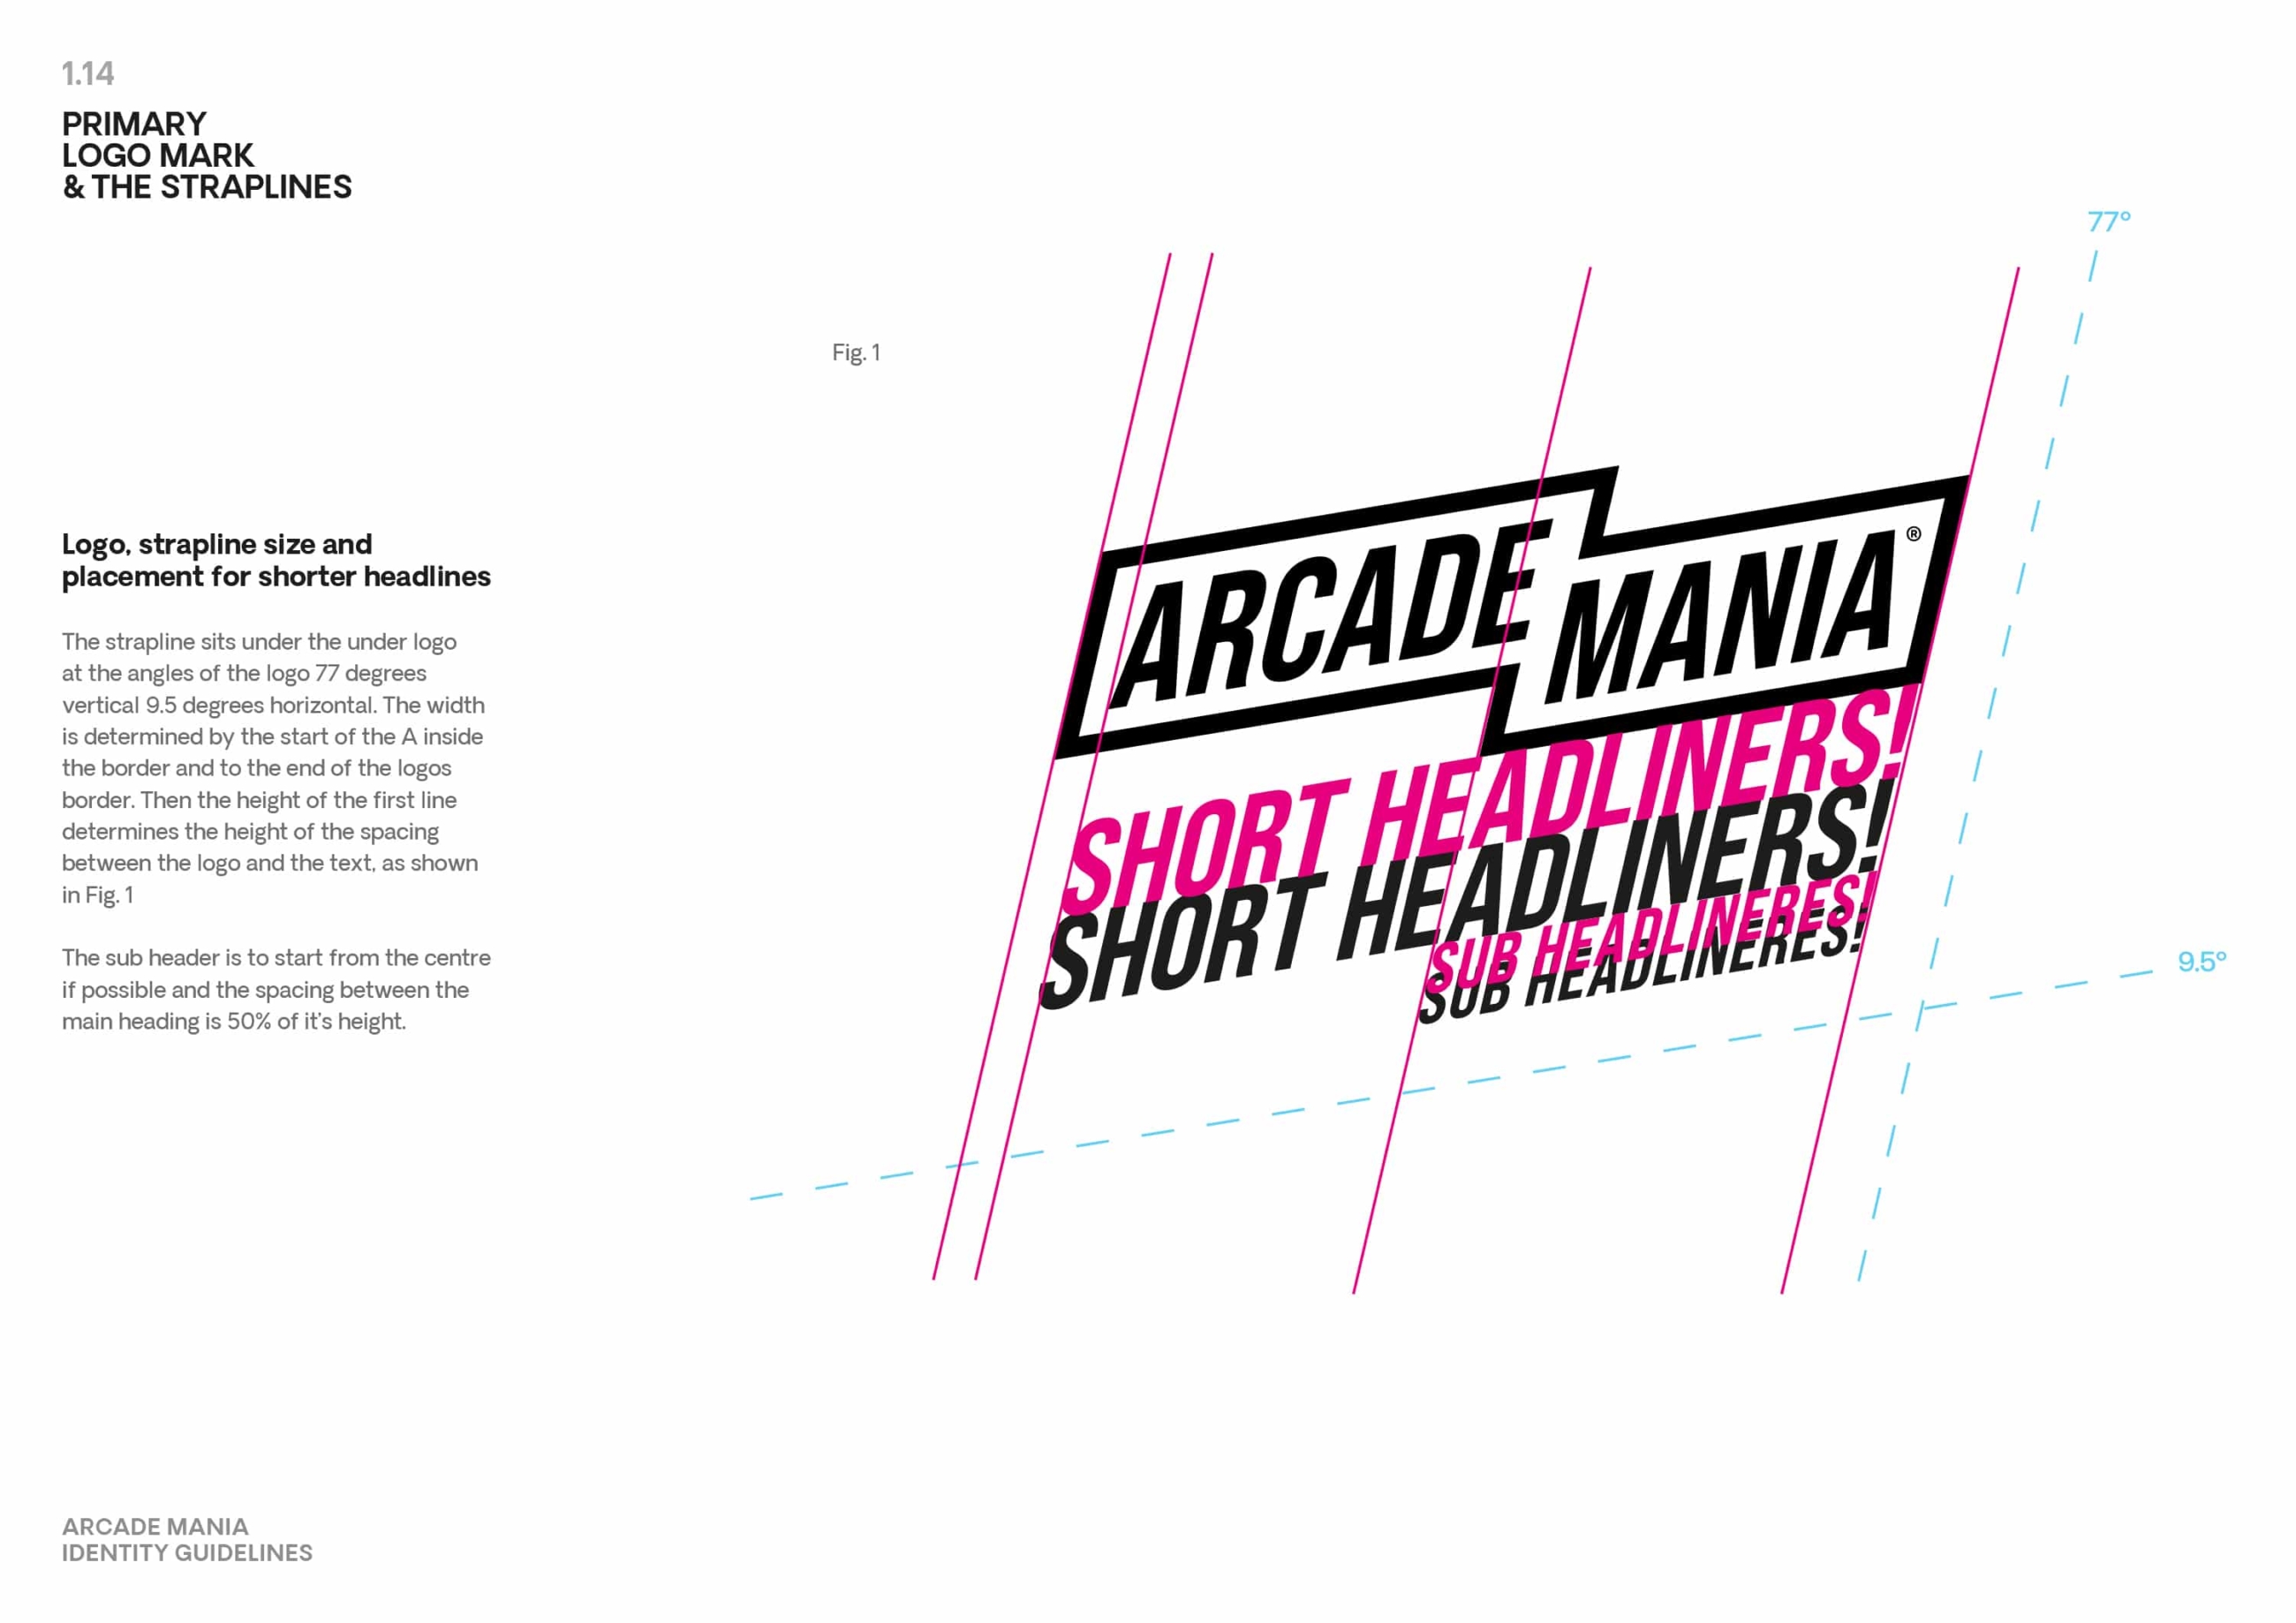 arcade mania brand guidelines m 15